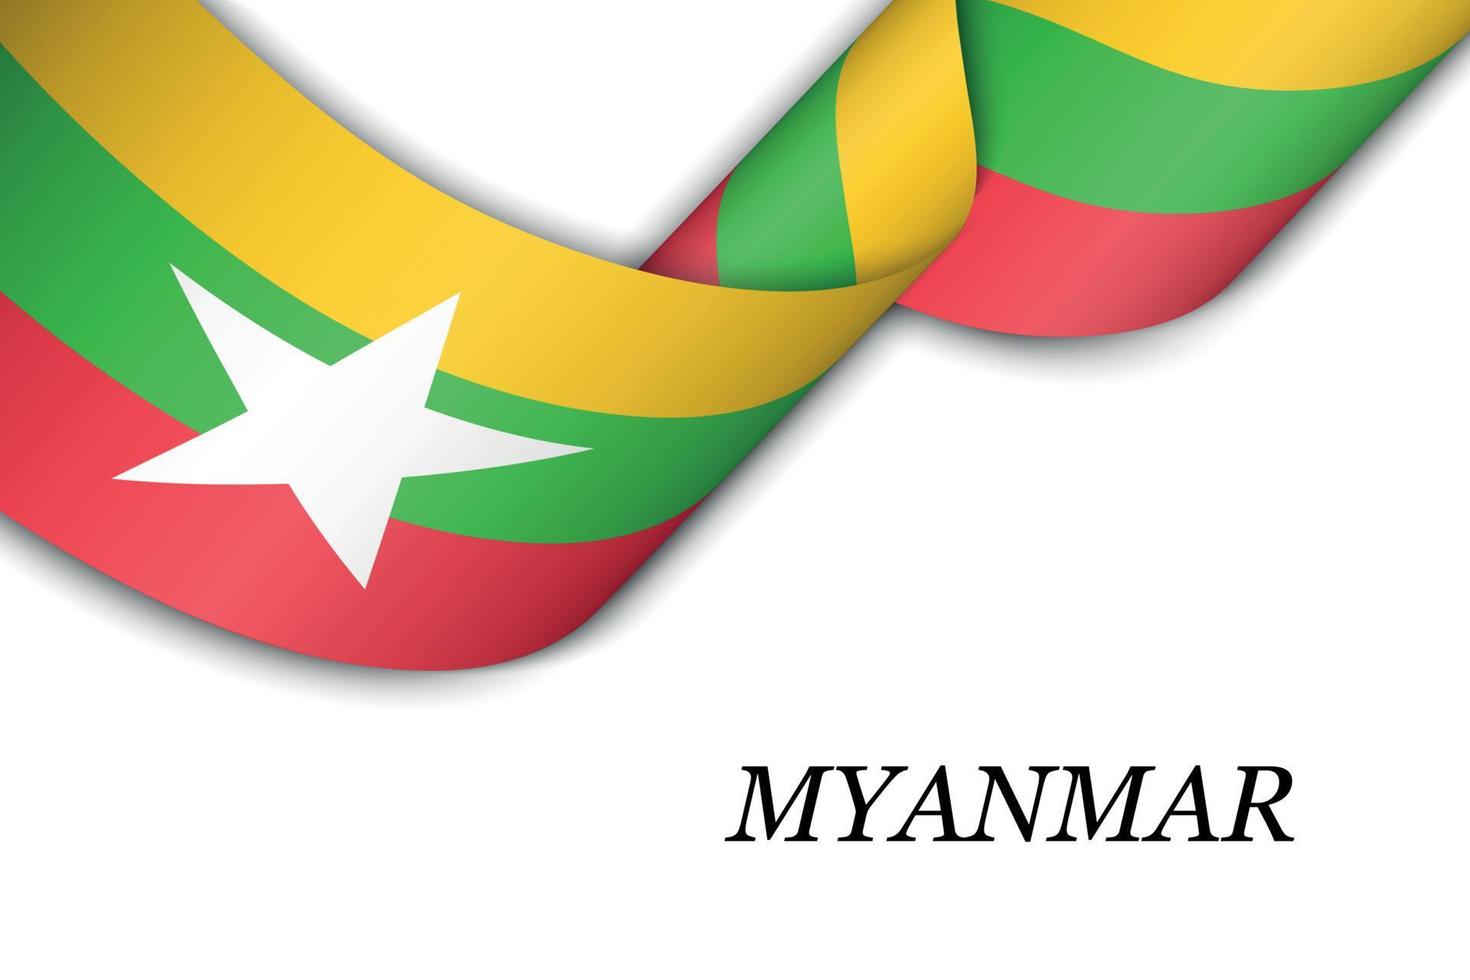 sventolando il nastro o lo striscione con la bandiera del Myanmar vettore